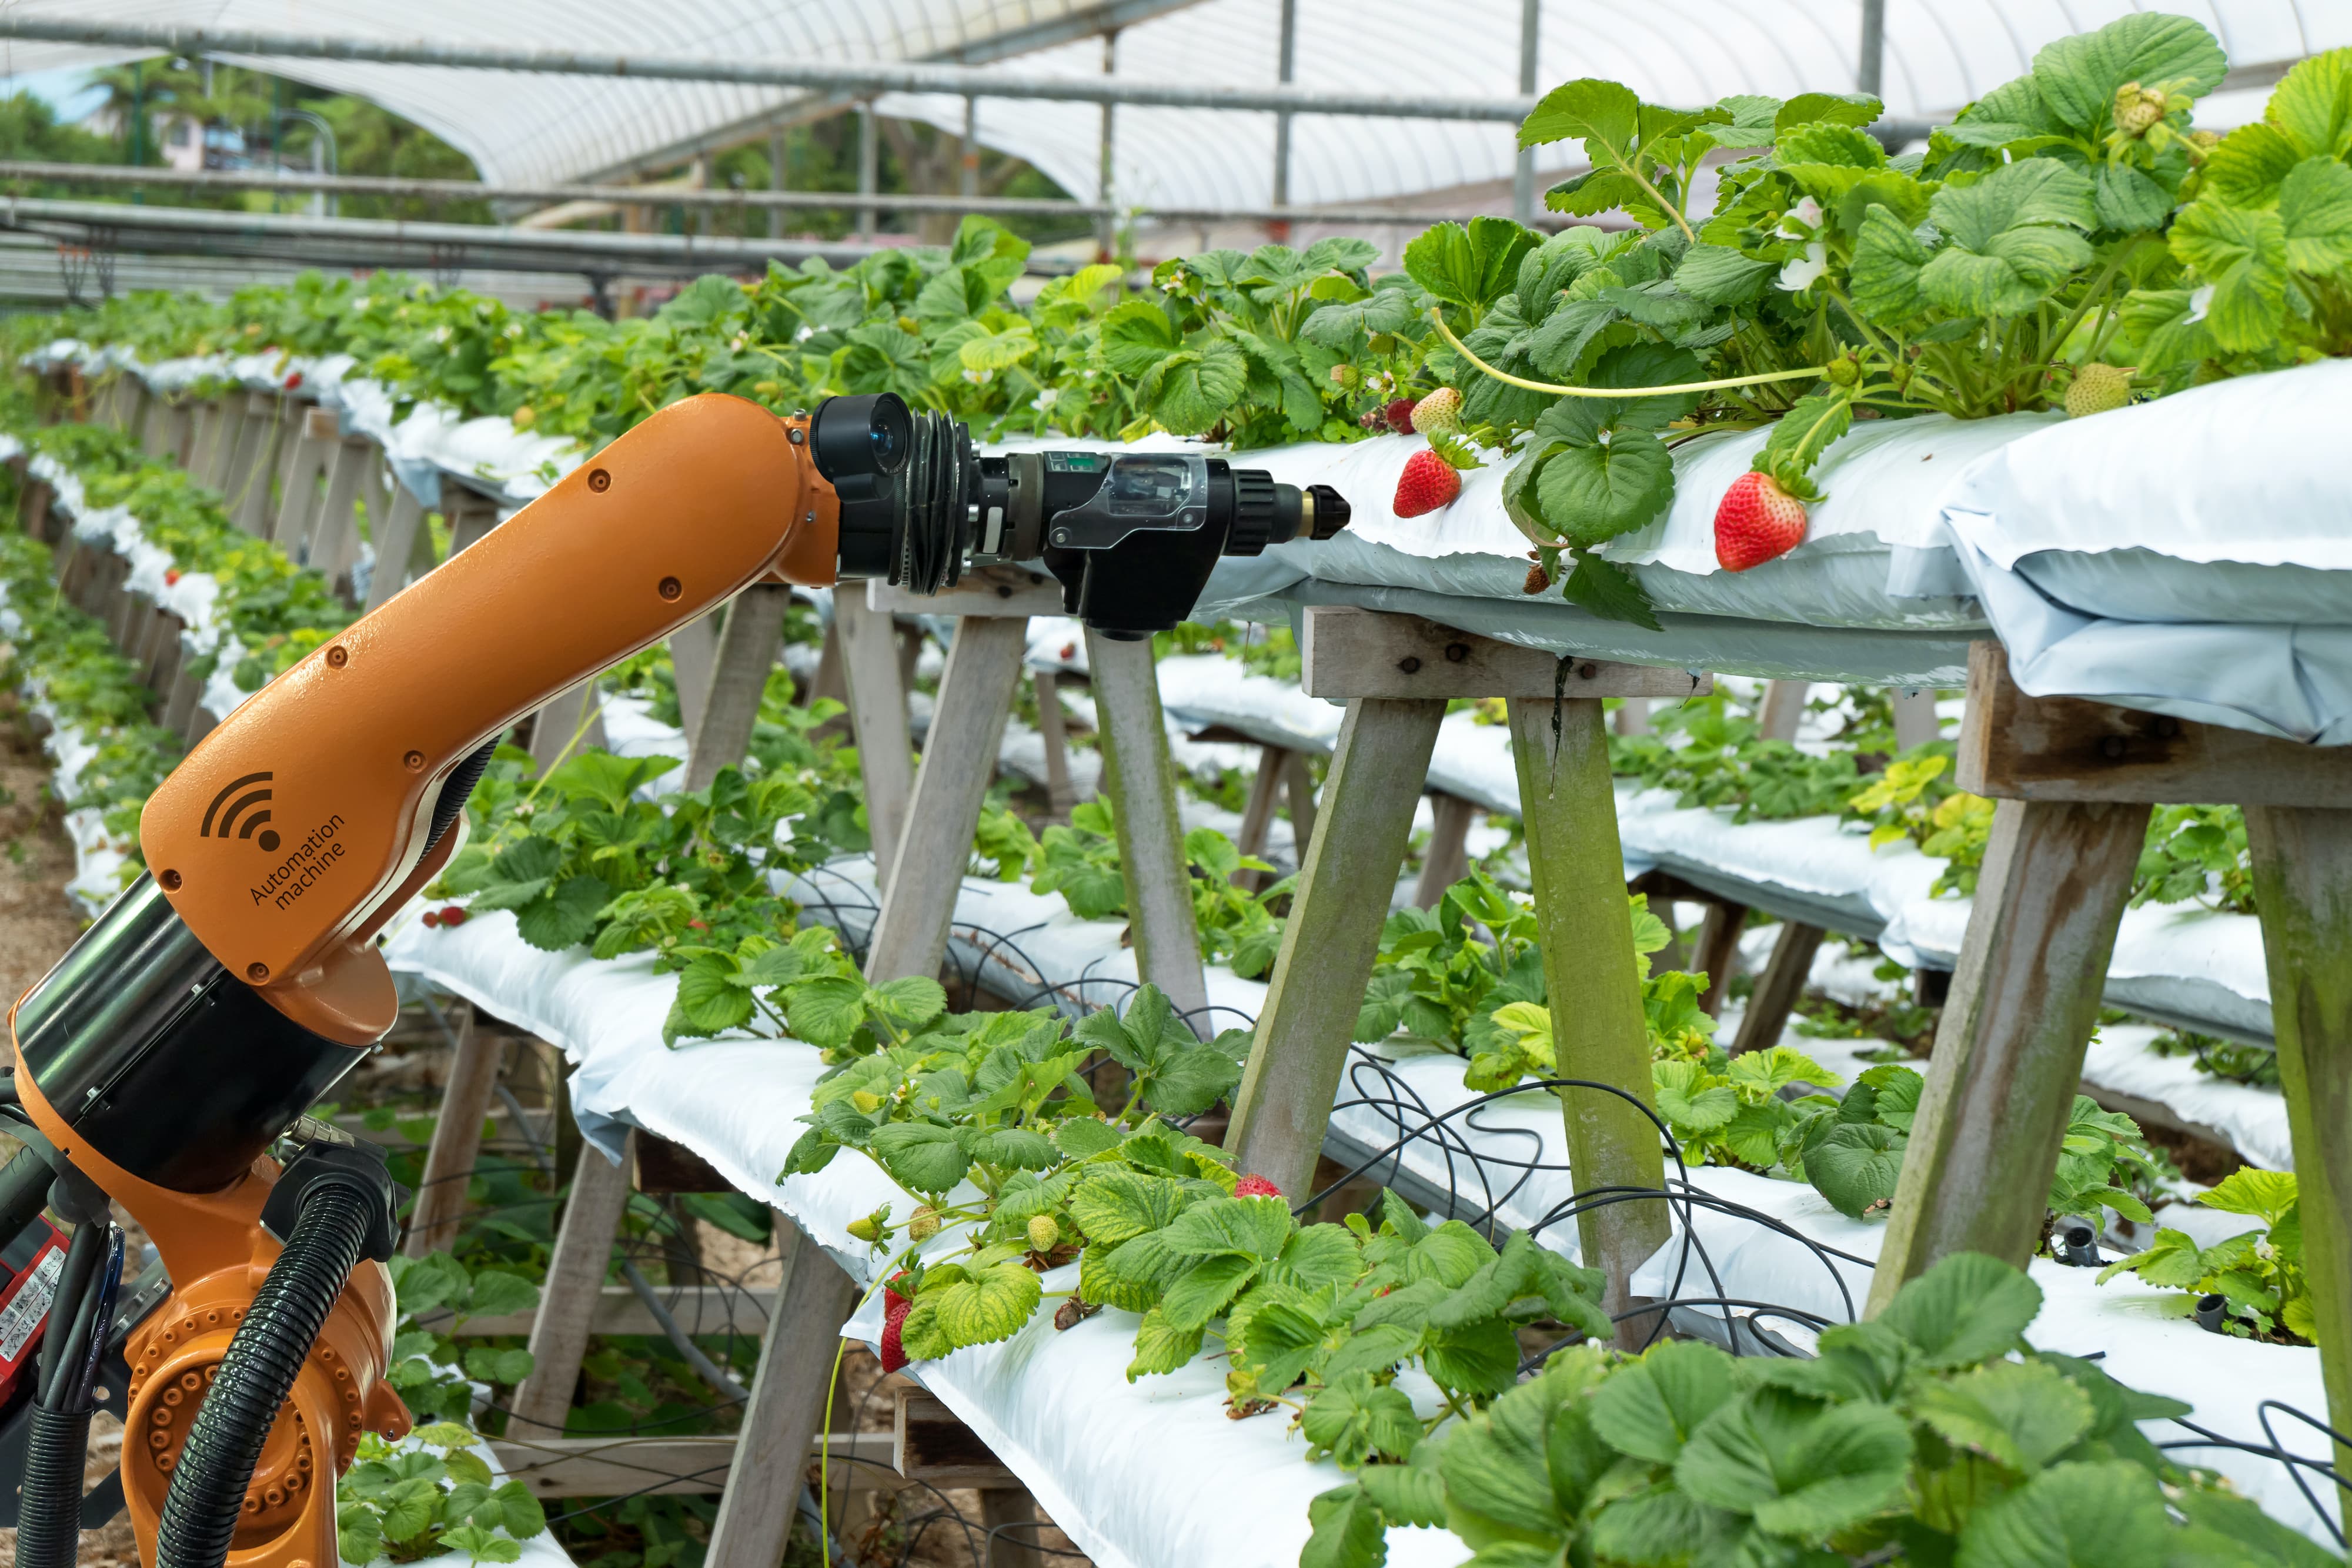 Fresh Produce Technologies